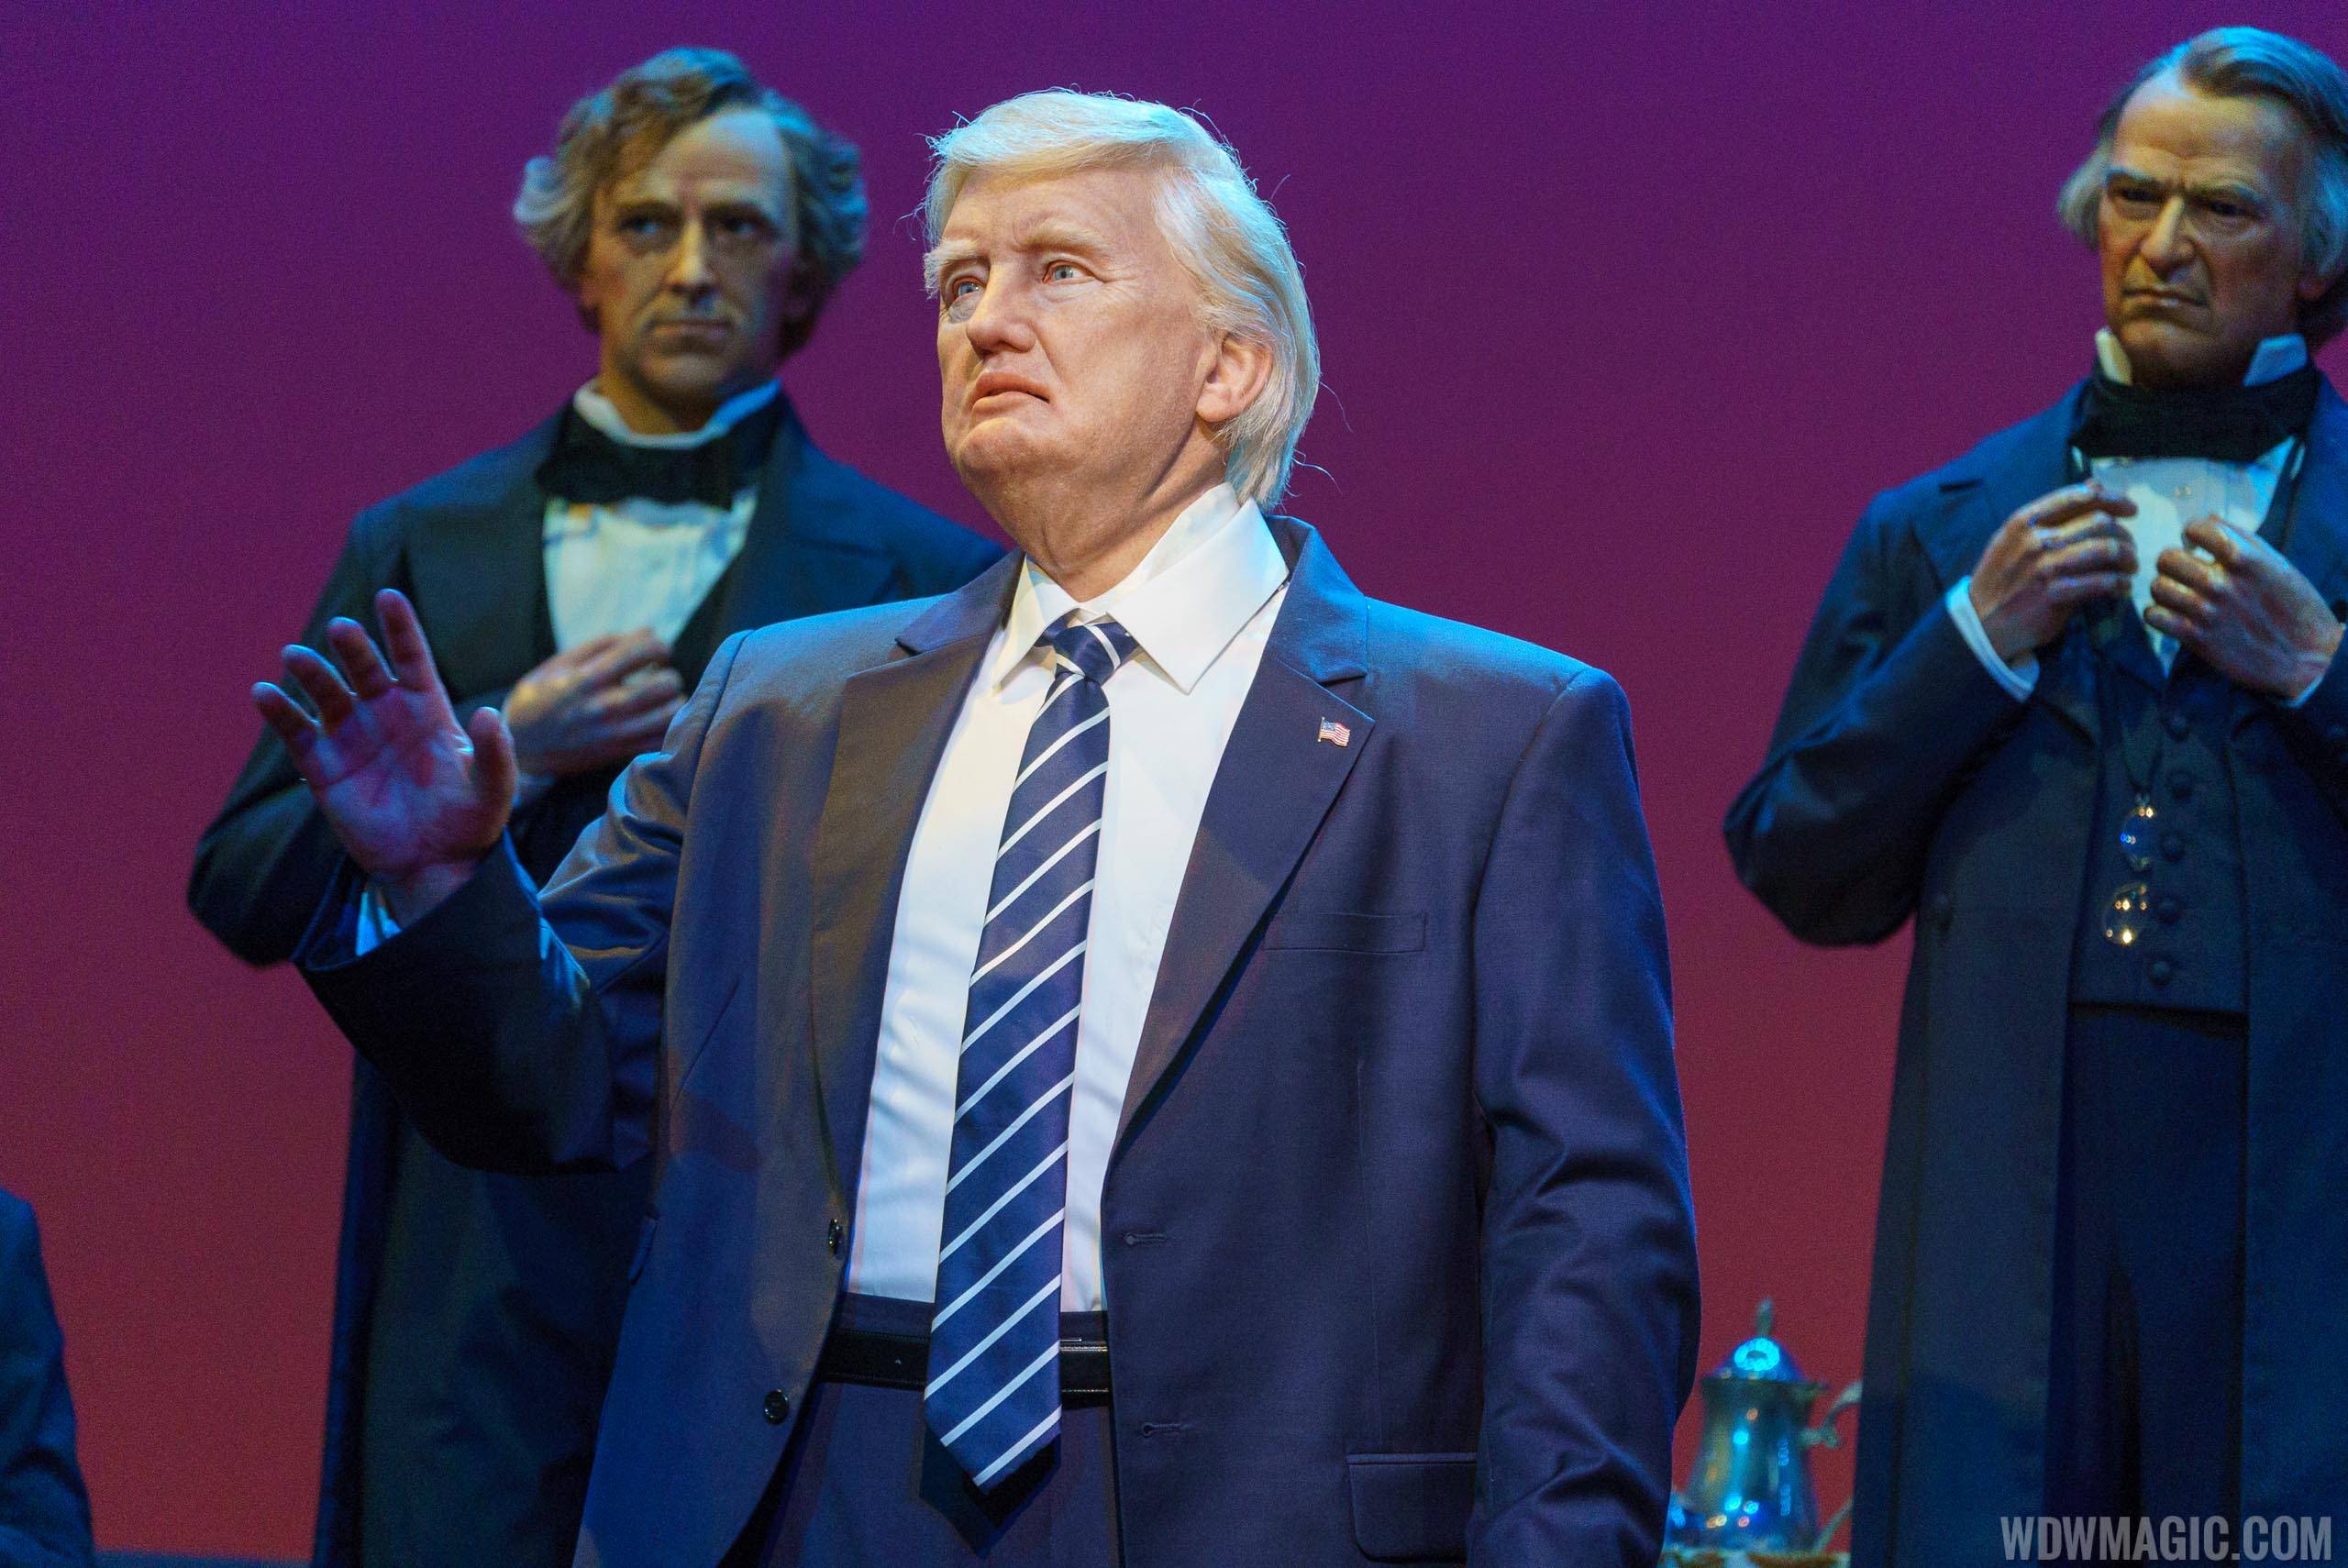 Donald Trump audio-animatronic figure